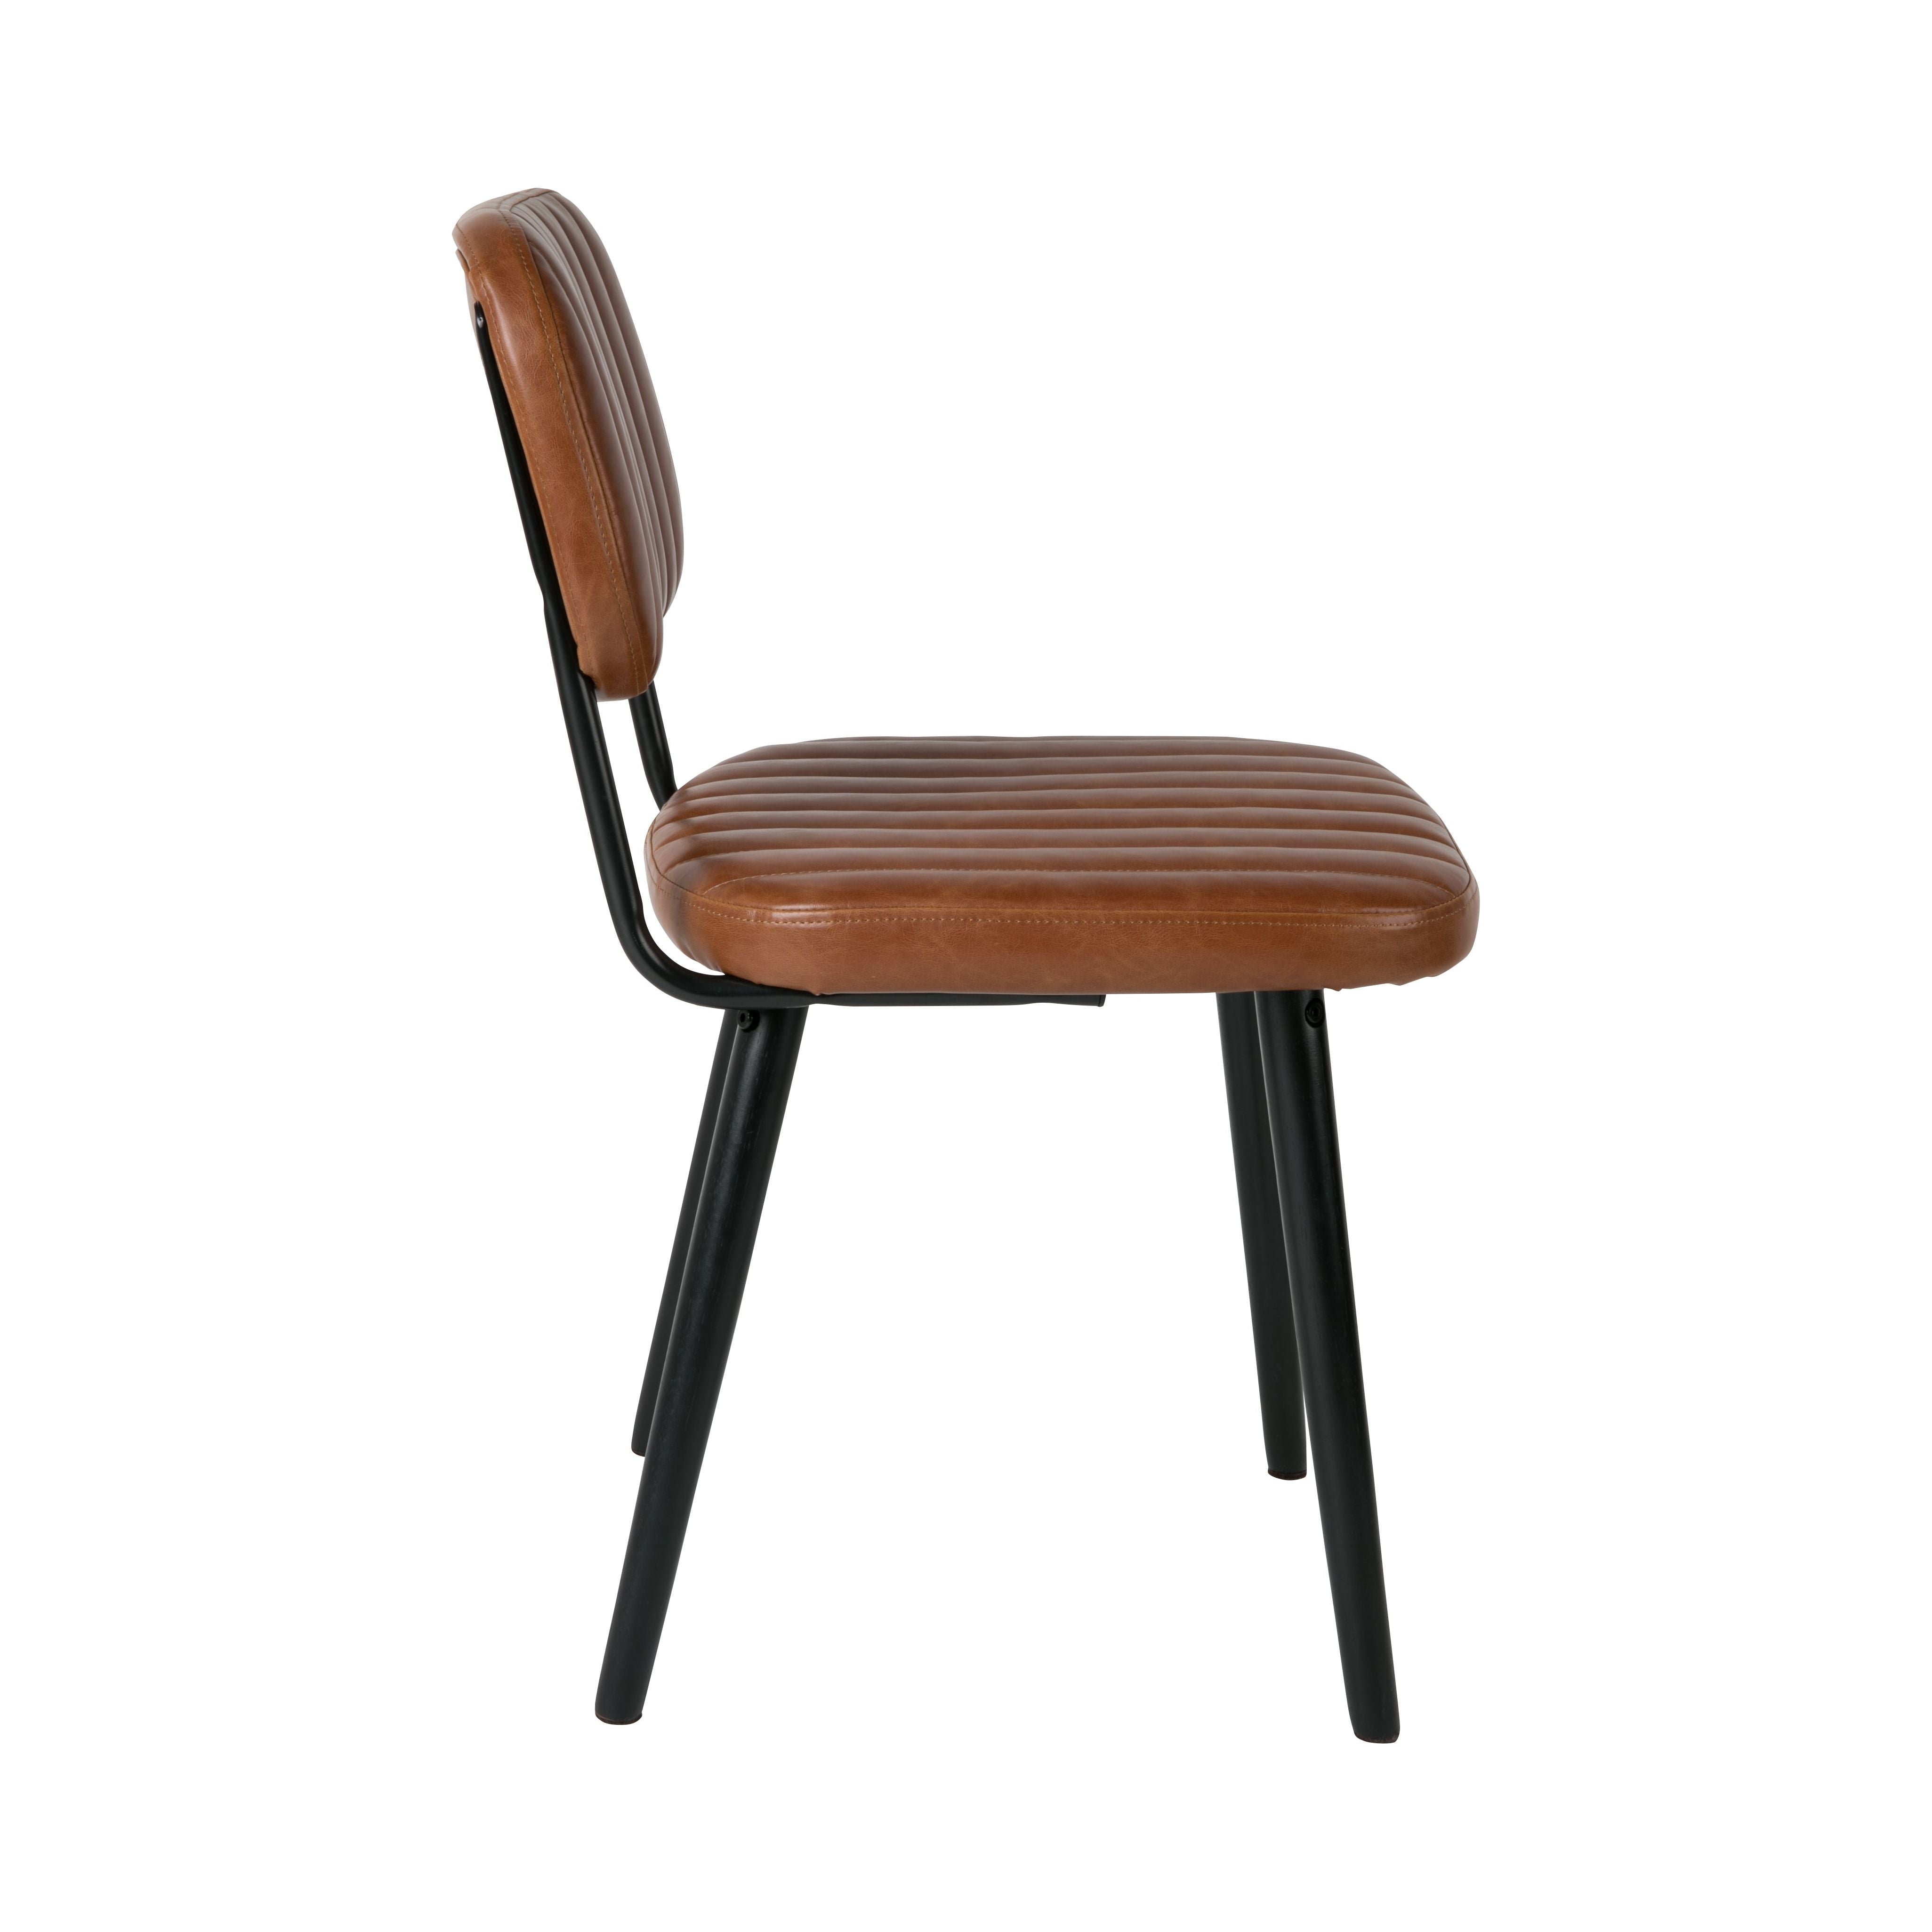 Chair jake worn brown